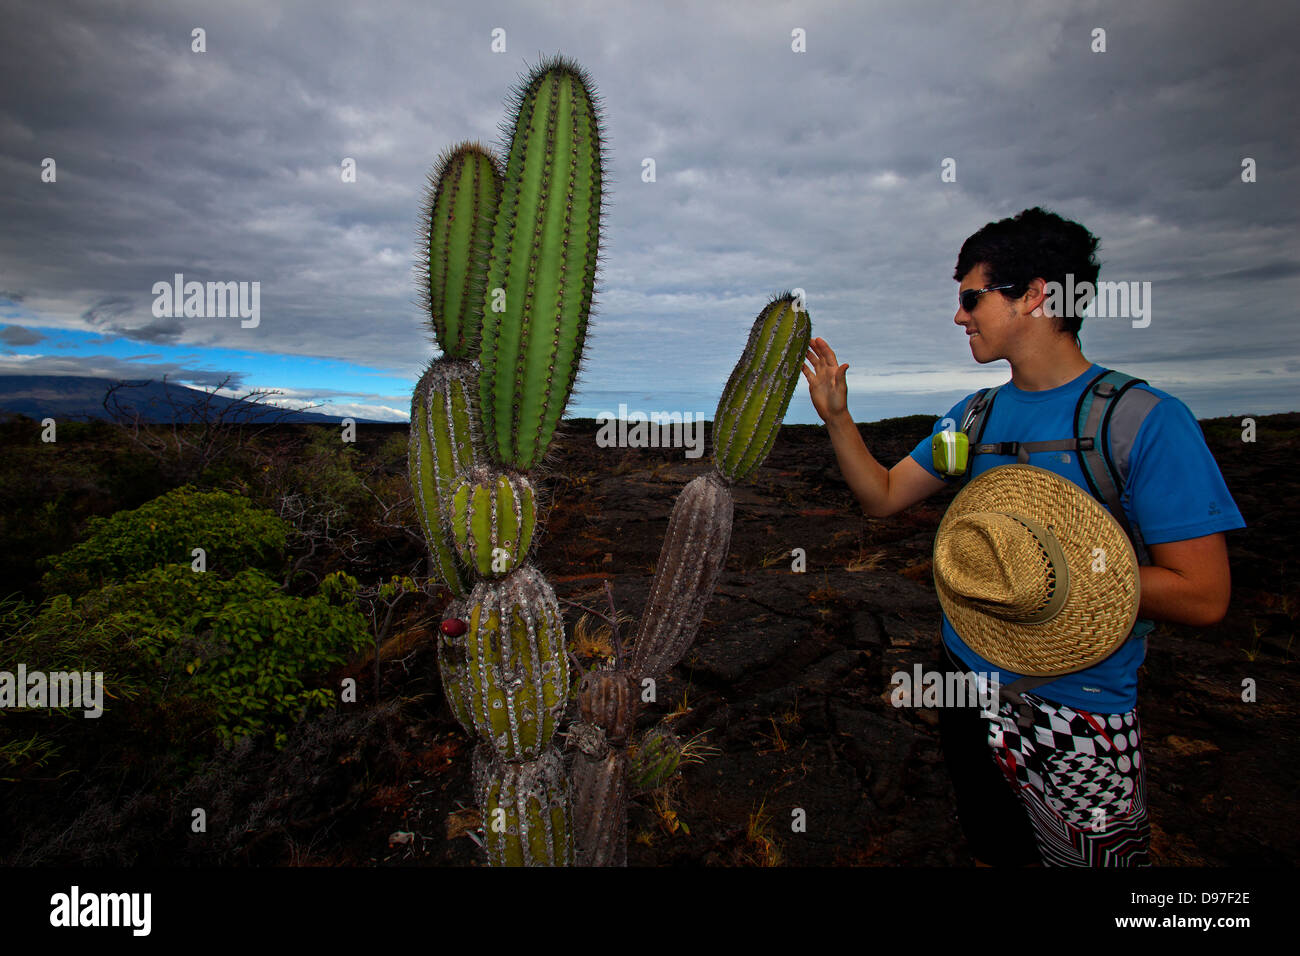 Max Kohrman, tourist touching a cactus on the lava bed Isabella Island, Punta Moreno, Galapagos Stock Photo